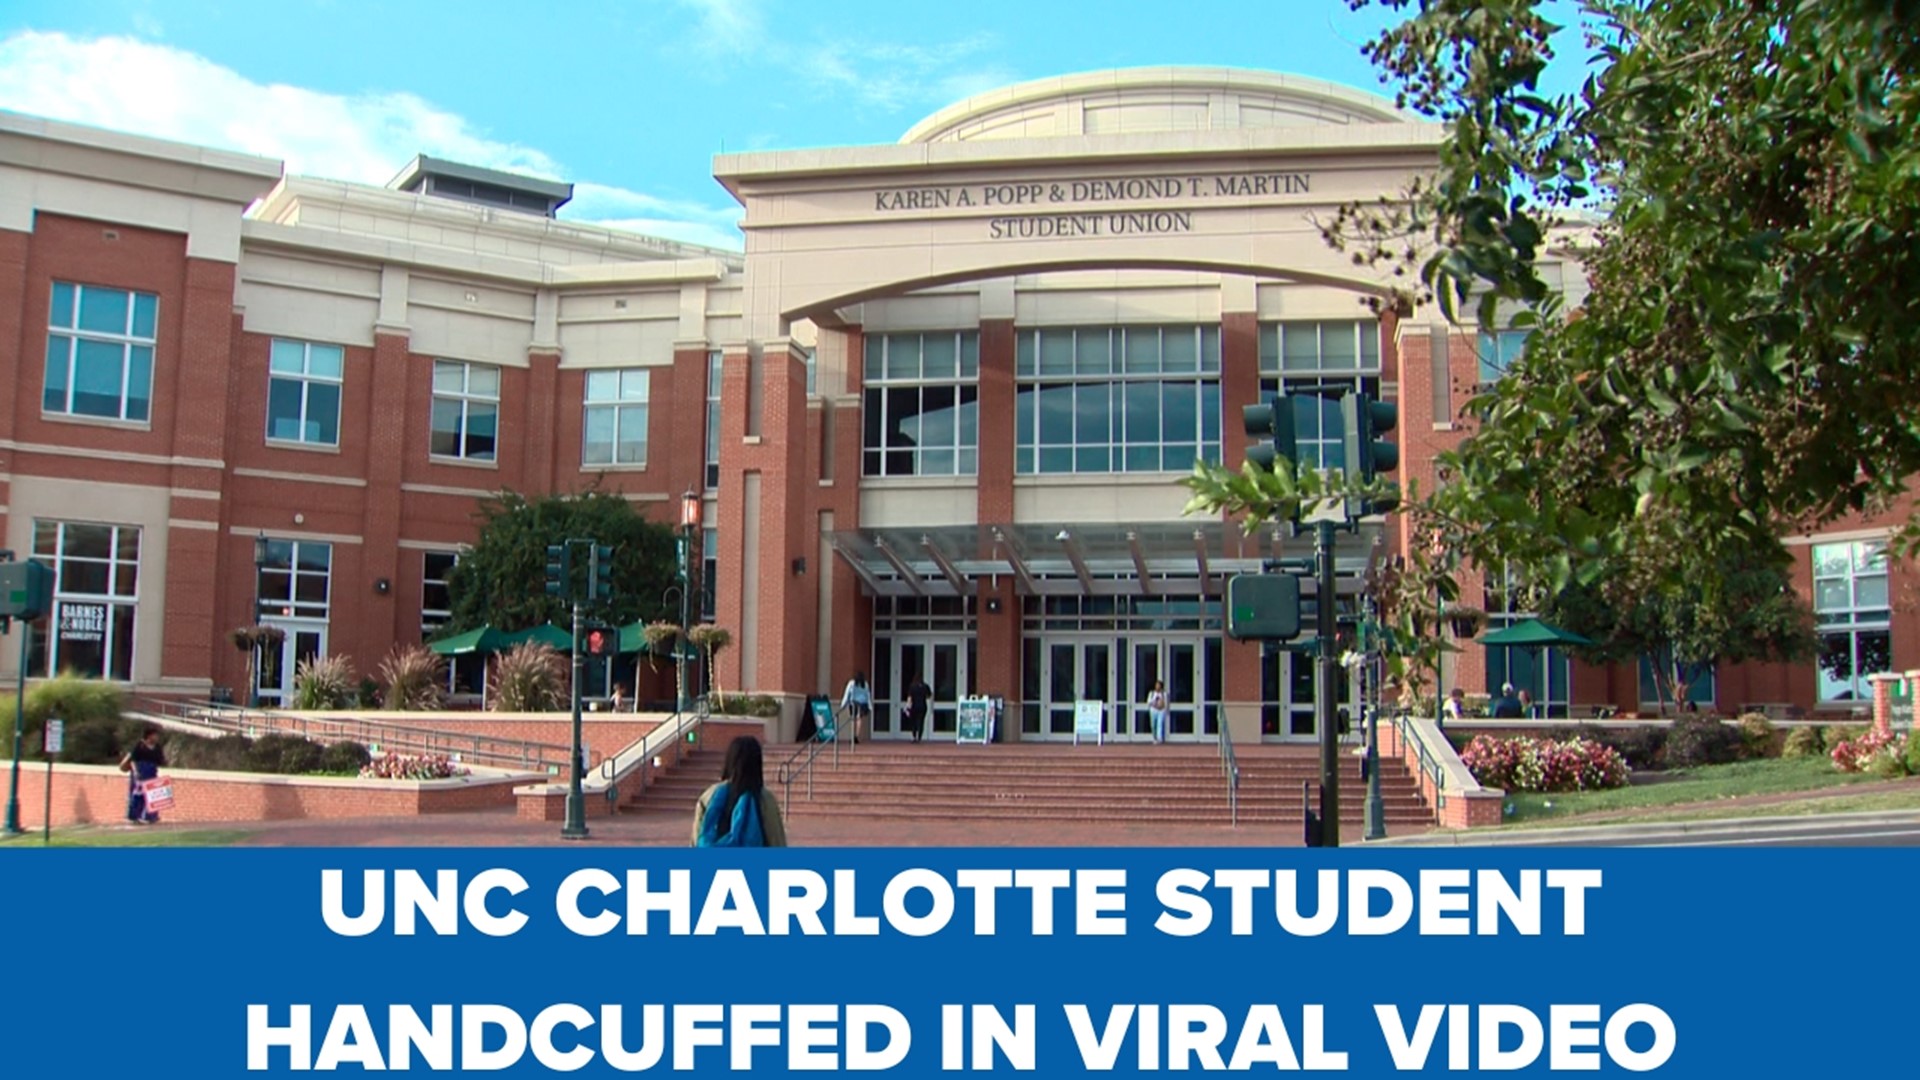 UNC Charlotte student handcuffed, university apologizes